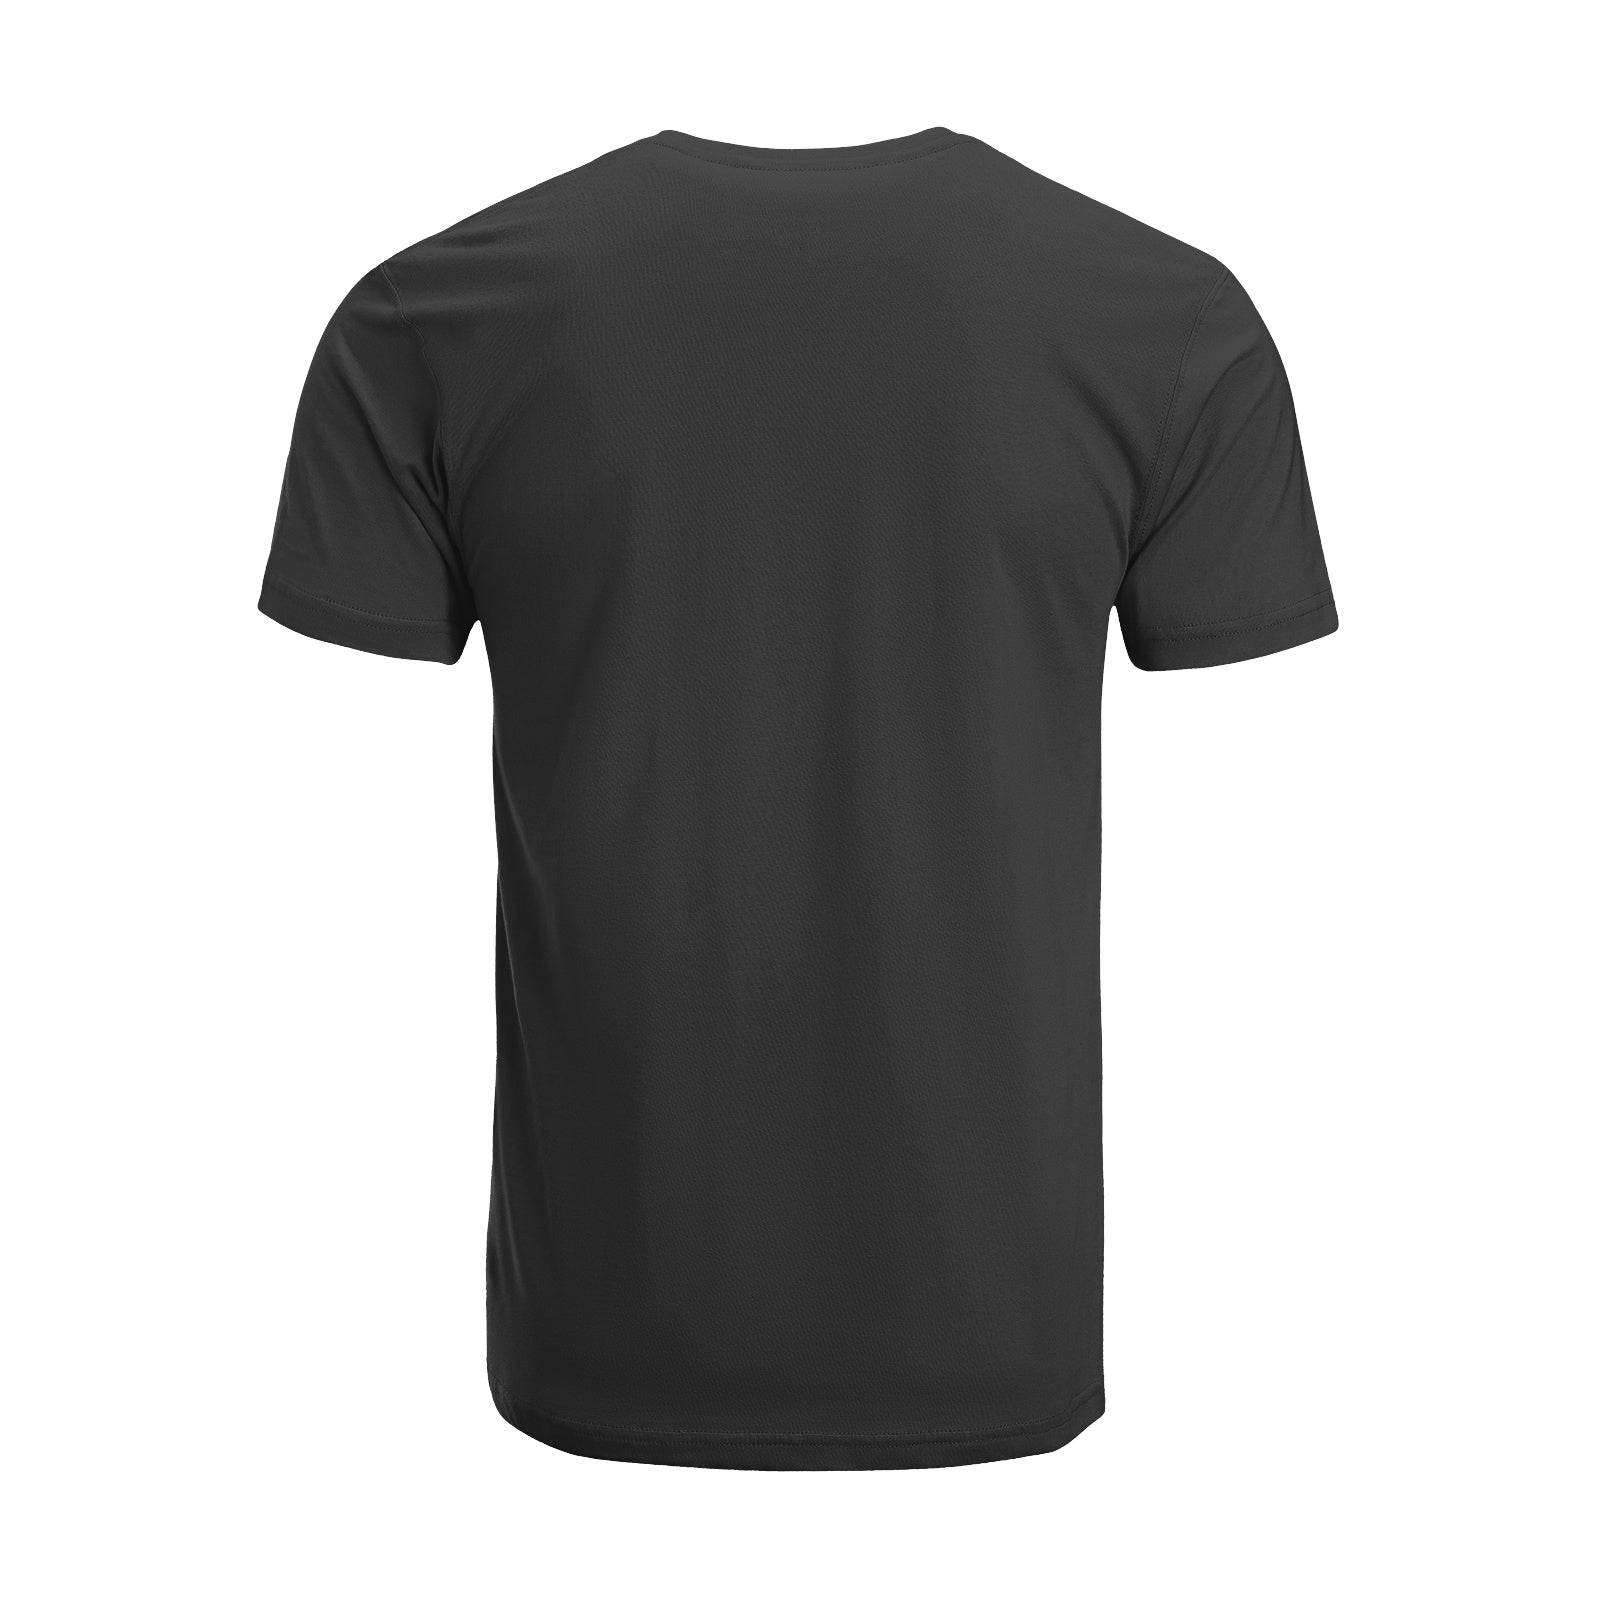 Unisex Short Sleeve Crew Neck Cotton Jersey T-Shirt CAT 20 - Tara-Outfits.com